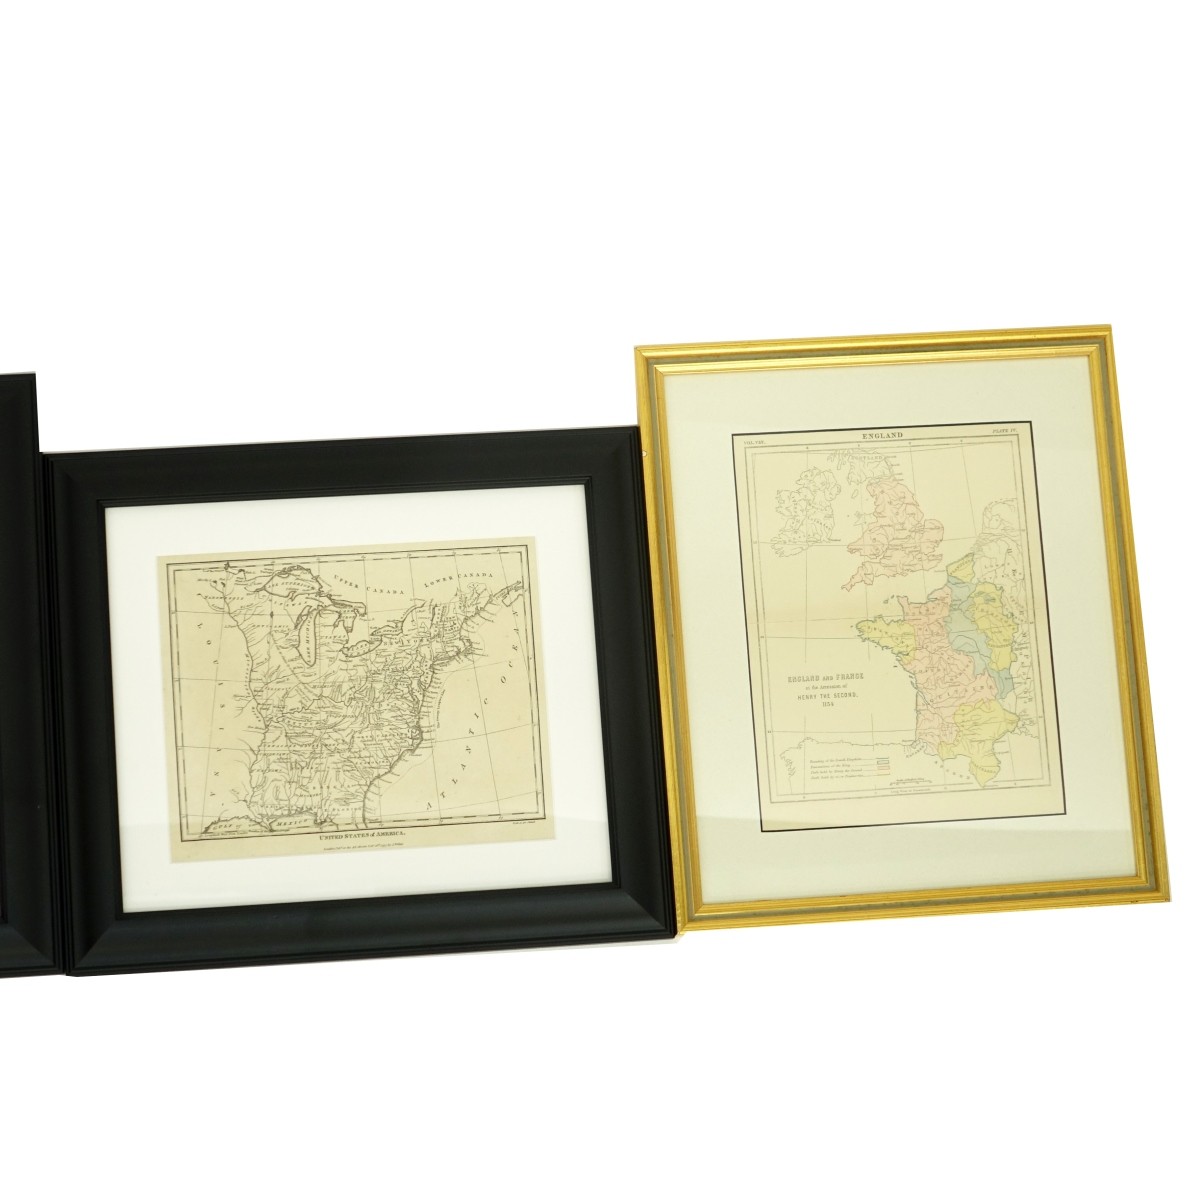 Five (5) Vintage Prints of Maps